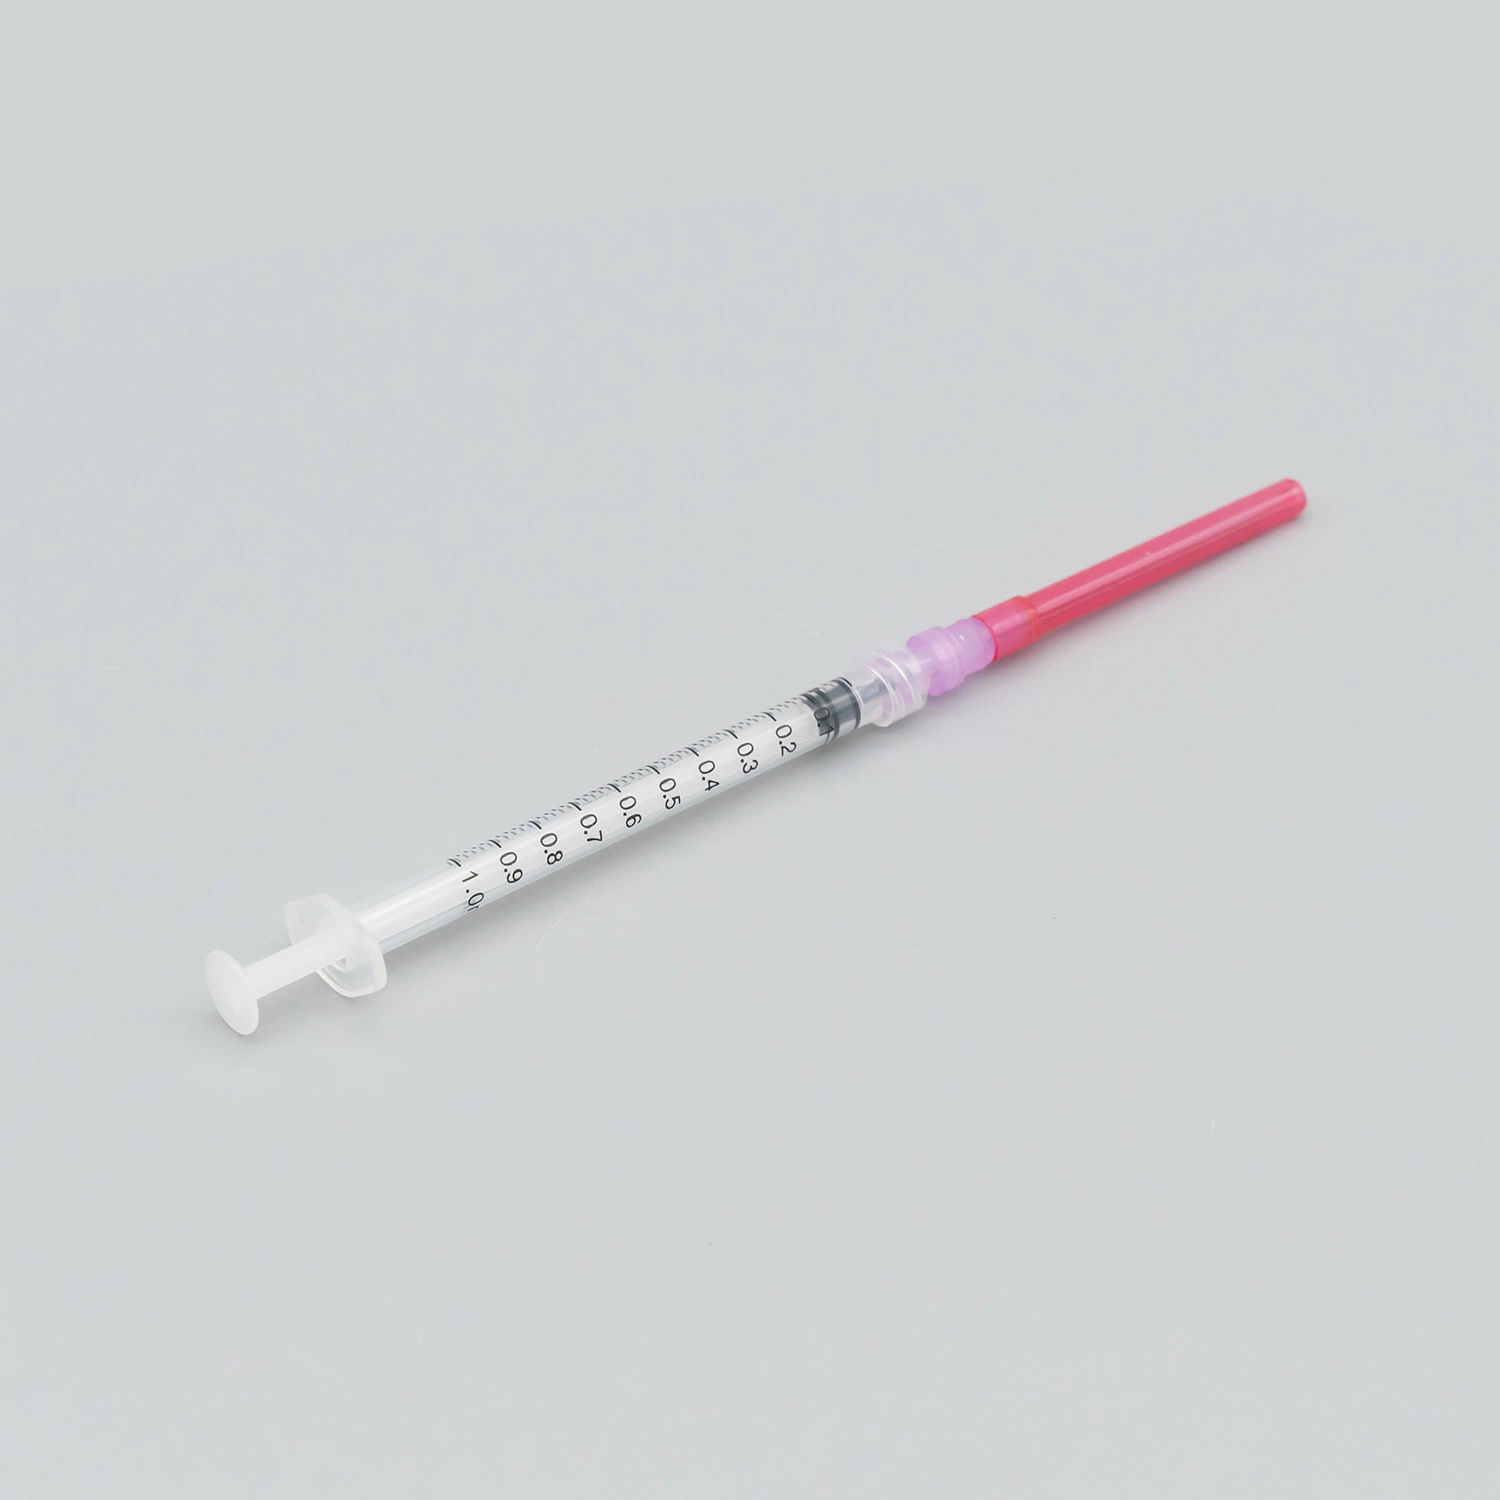 2parts Ethylene Oxide Sterilization OEM/ODM PE Bag/Blister Pack, Junior Box, Shipping Carton Medical Products 5ml Syringe